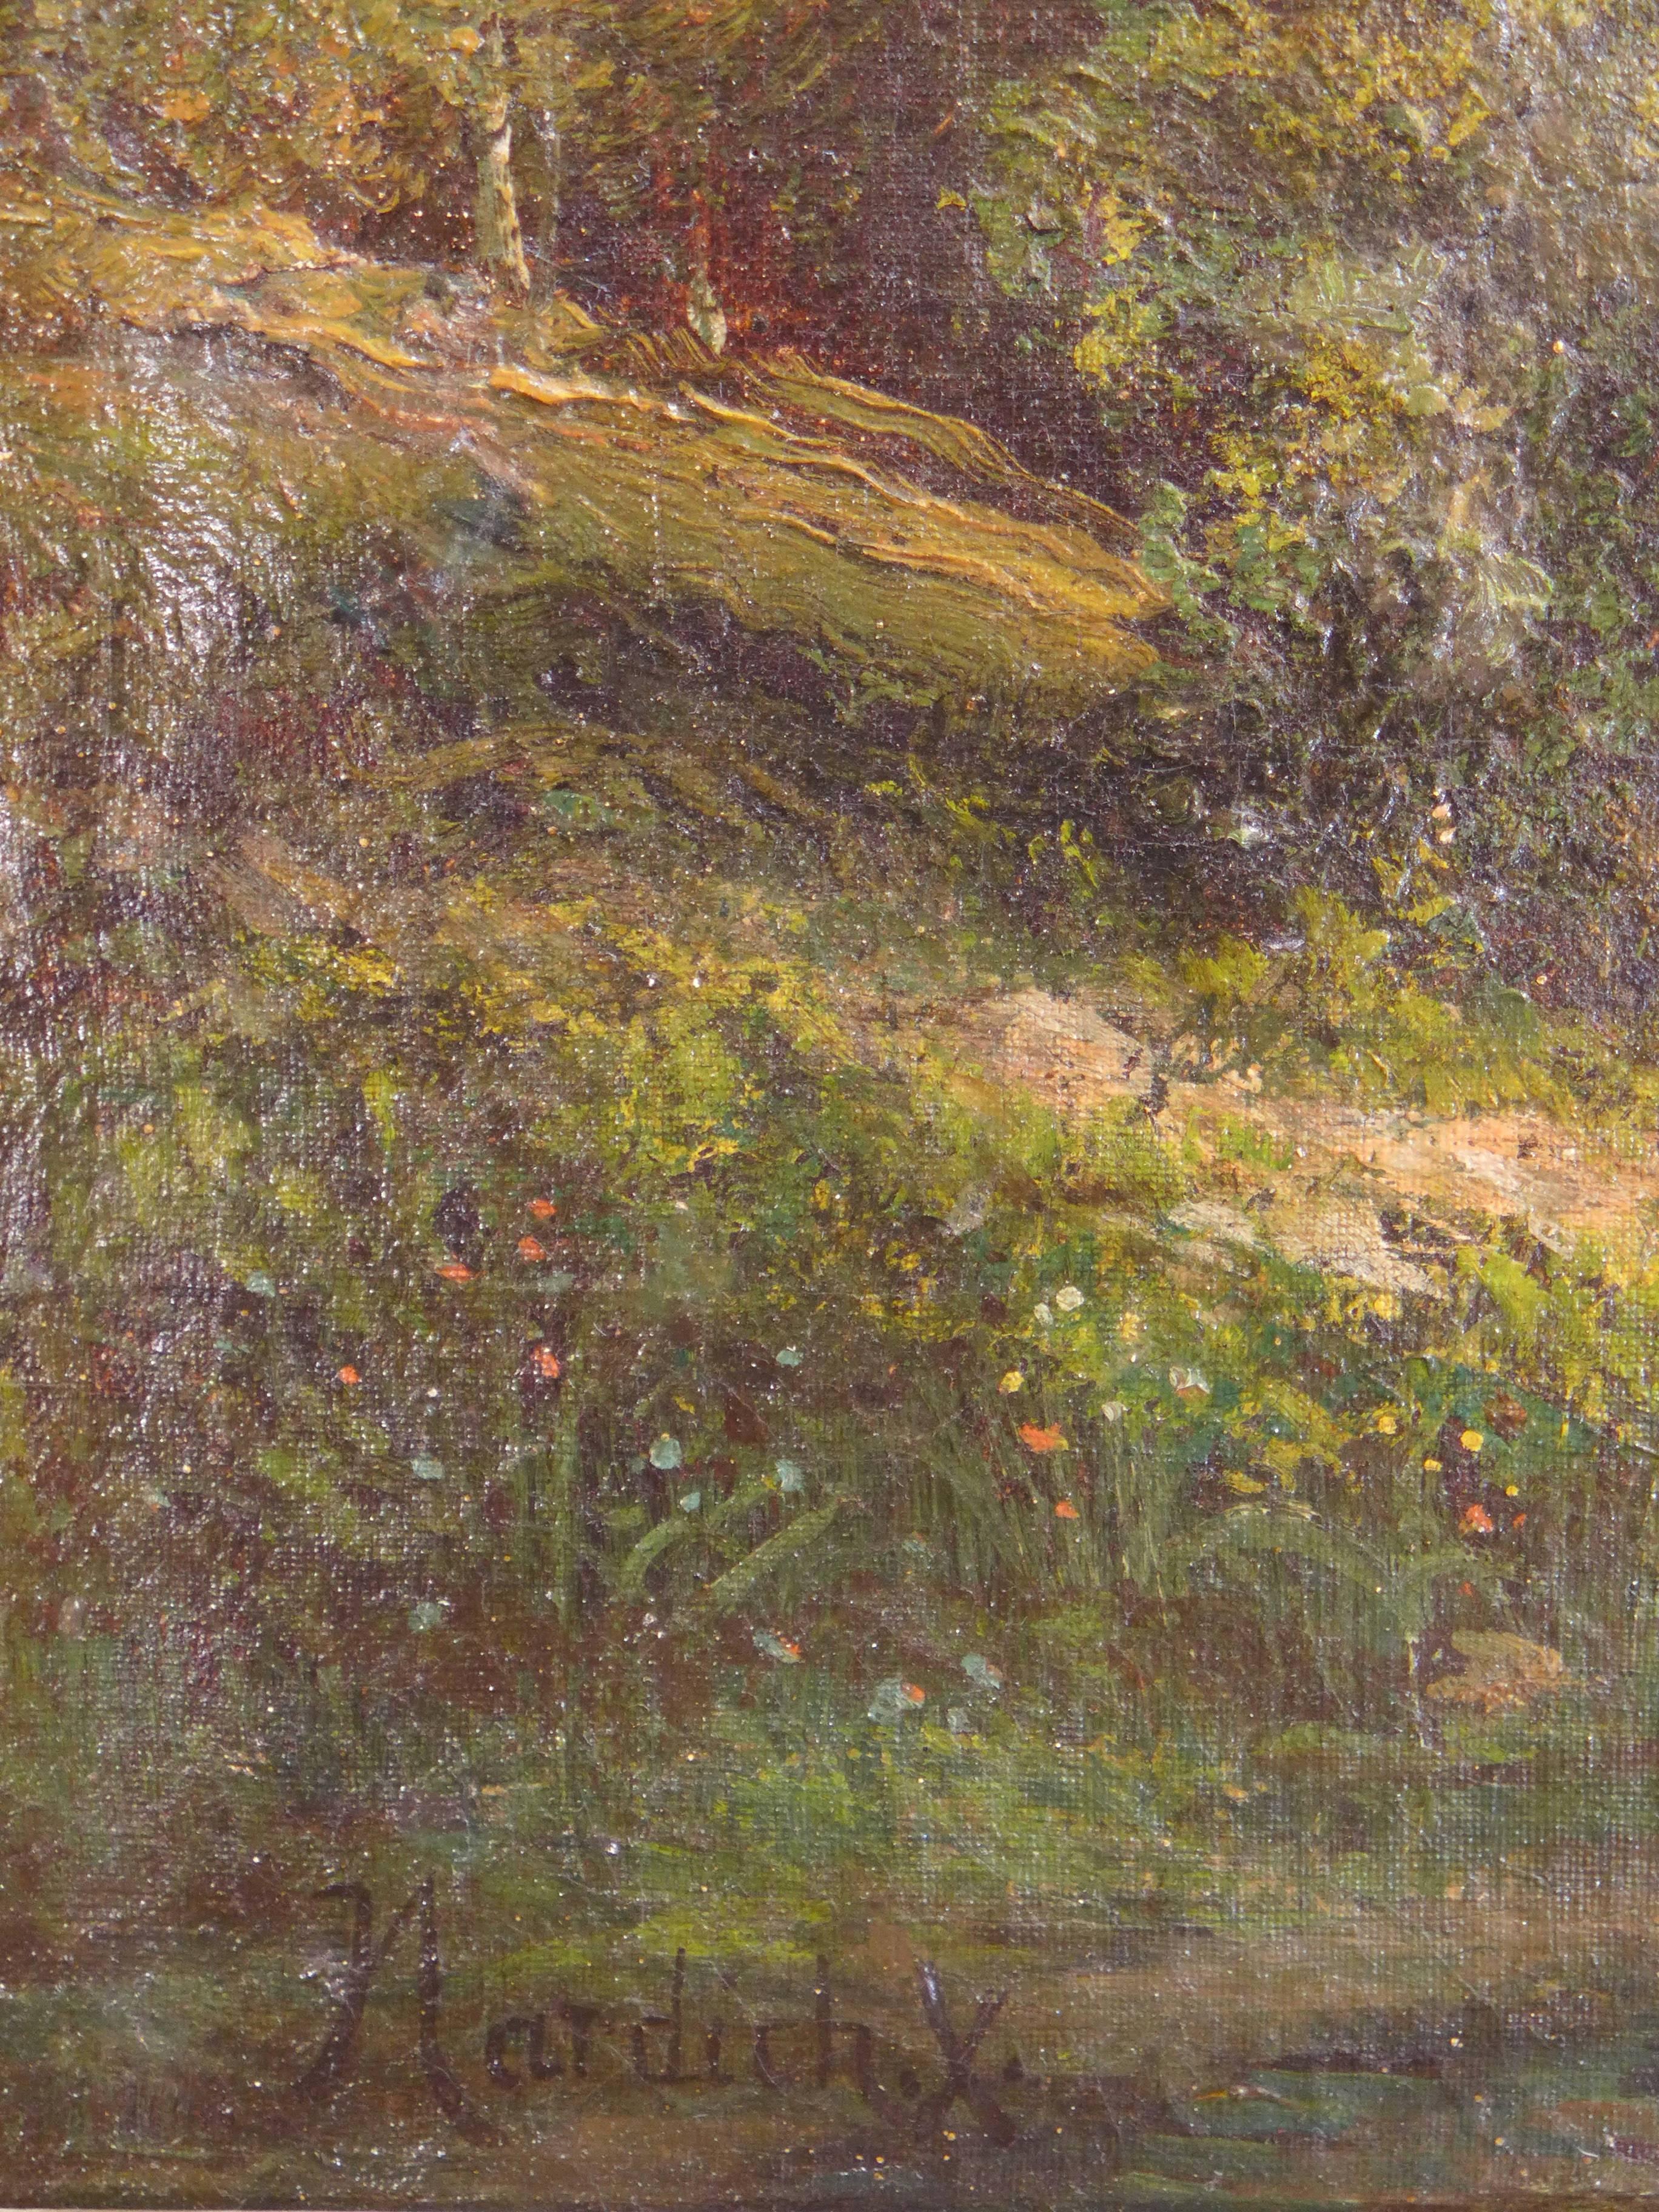 French Oil on Canvas, circa 1860 Barbizon School ‘Rural Landscape’ Sign